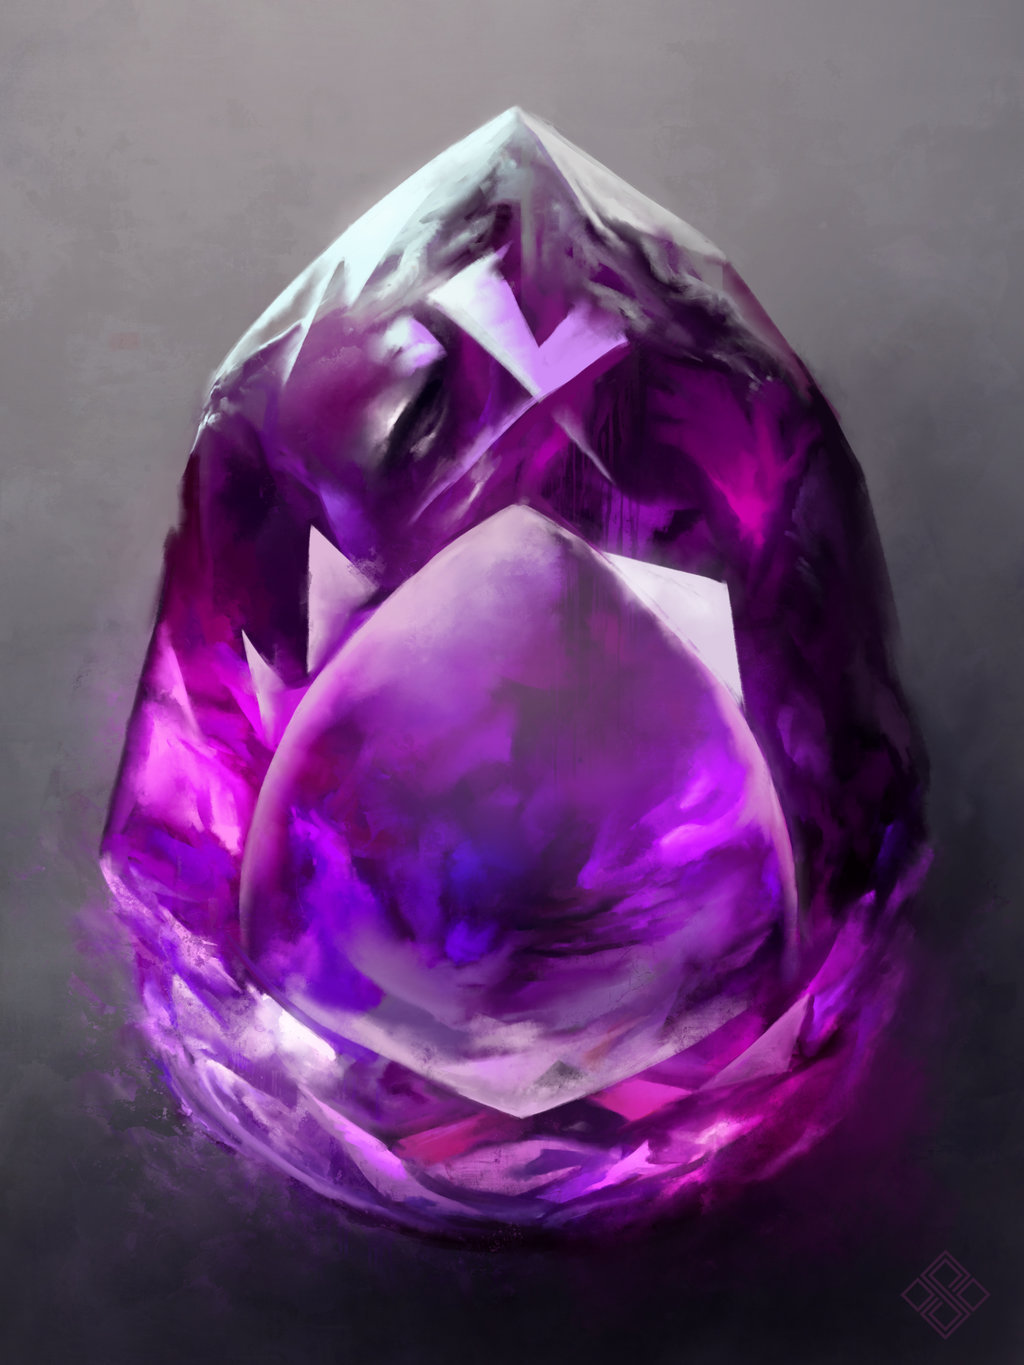 Stone арт. Кайбер Кристалл фиолетовый. Магик аметист камень. Infinity Amethyst. Аметист арт камень.